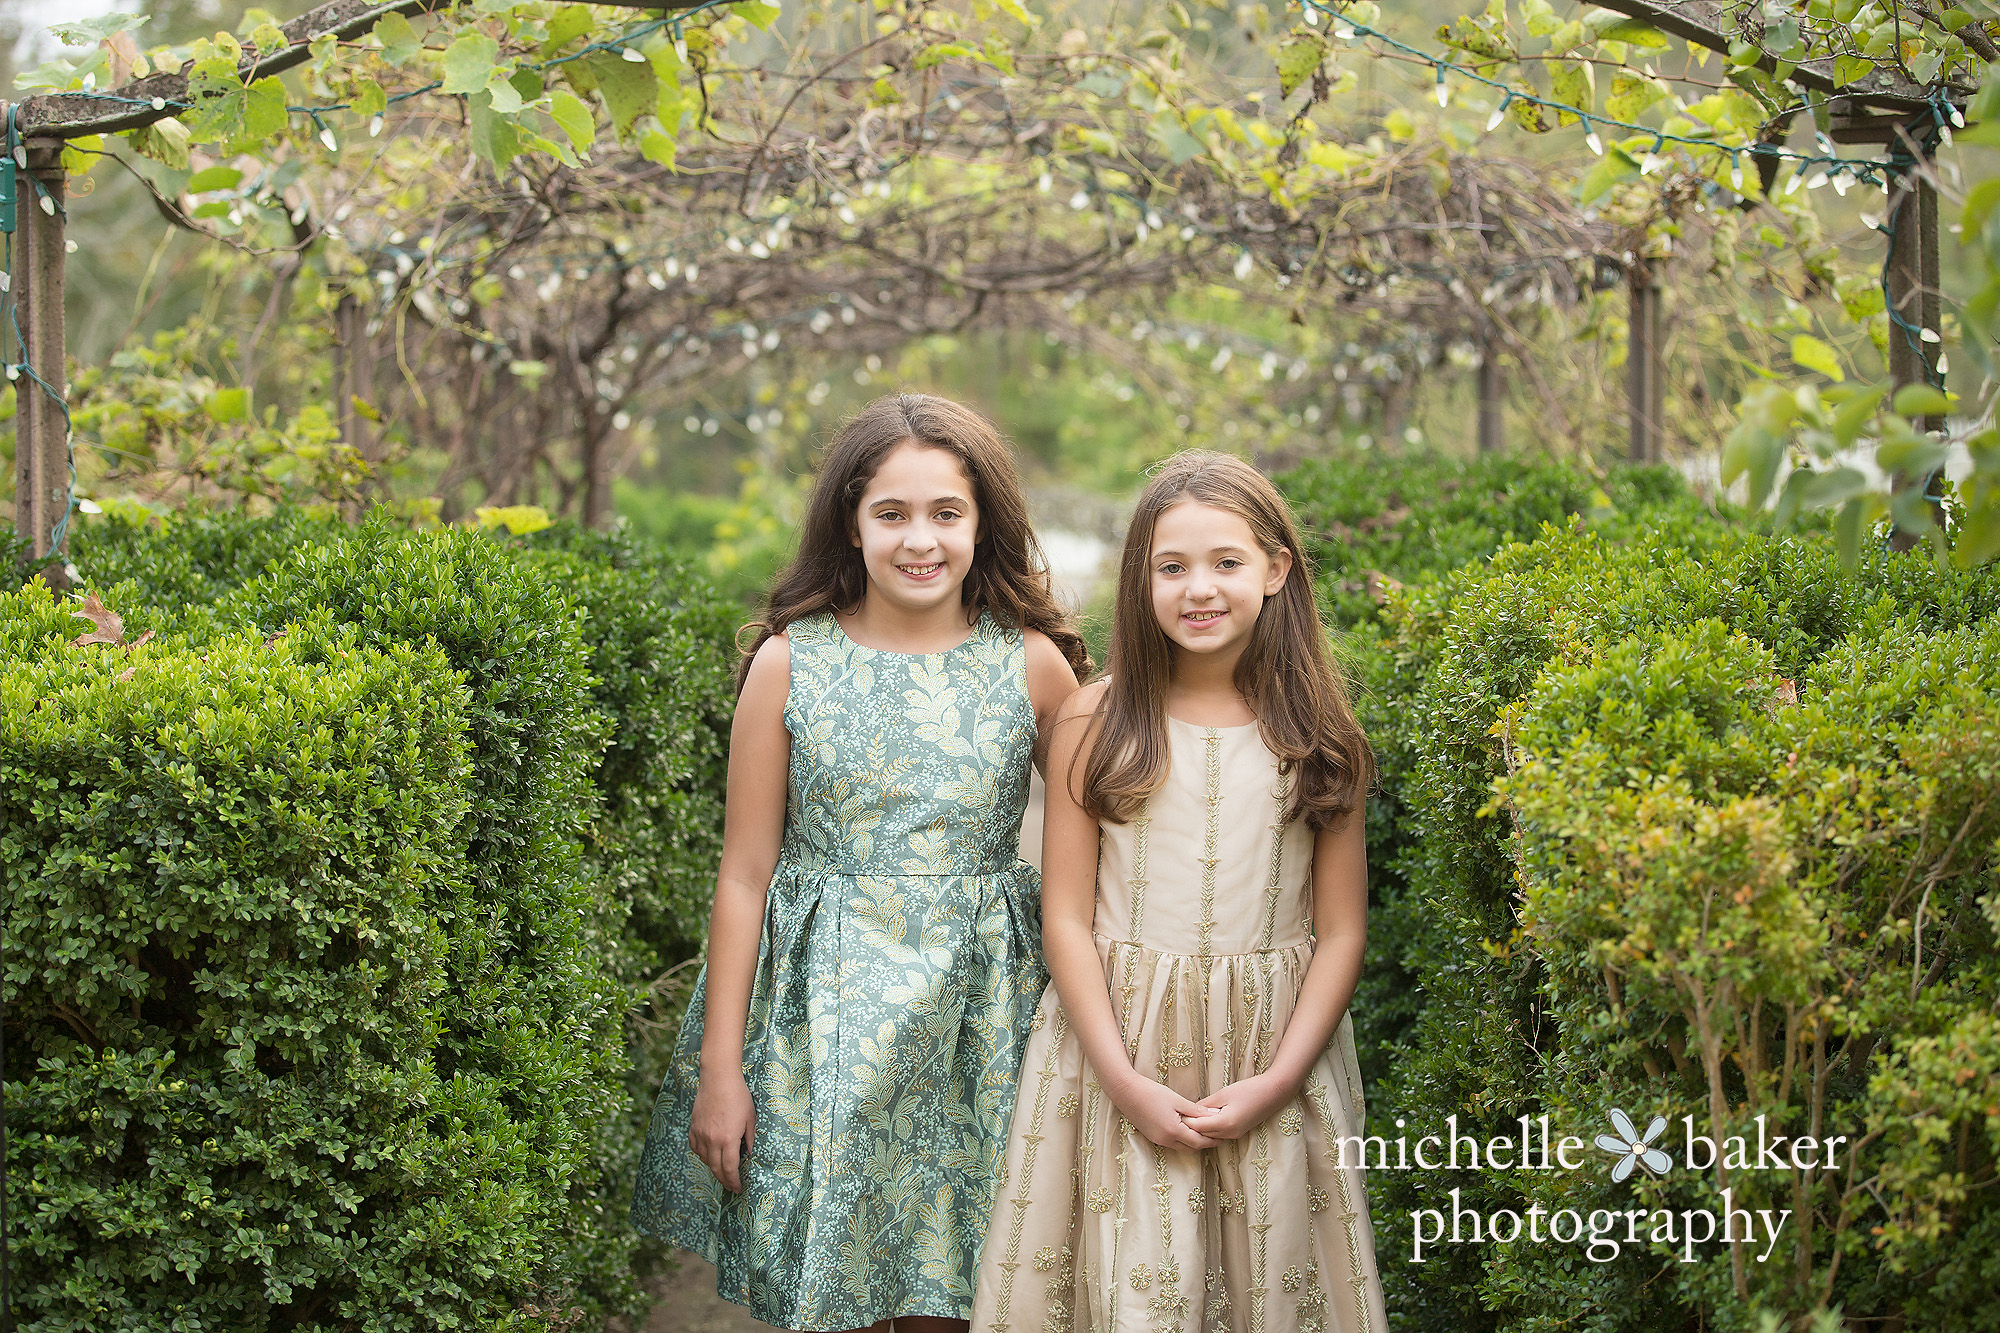 Sisters under a vine gazebo